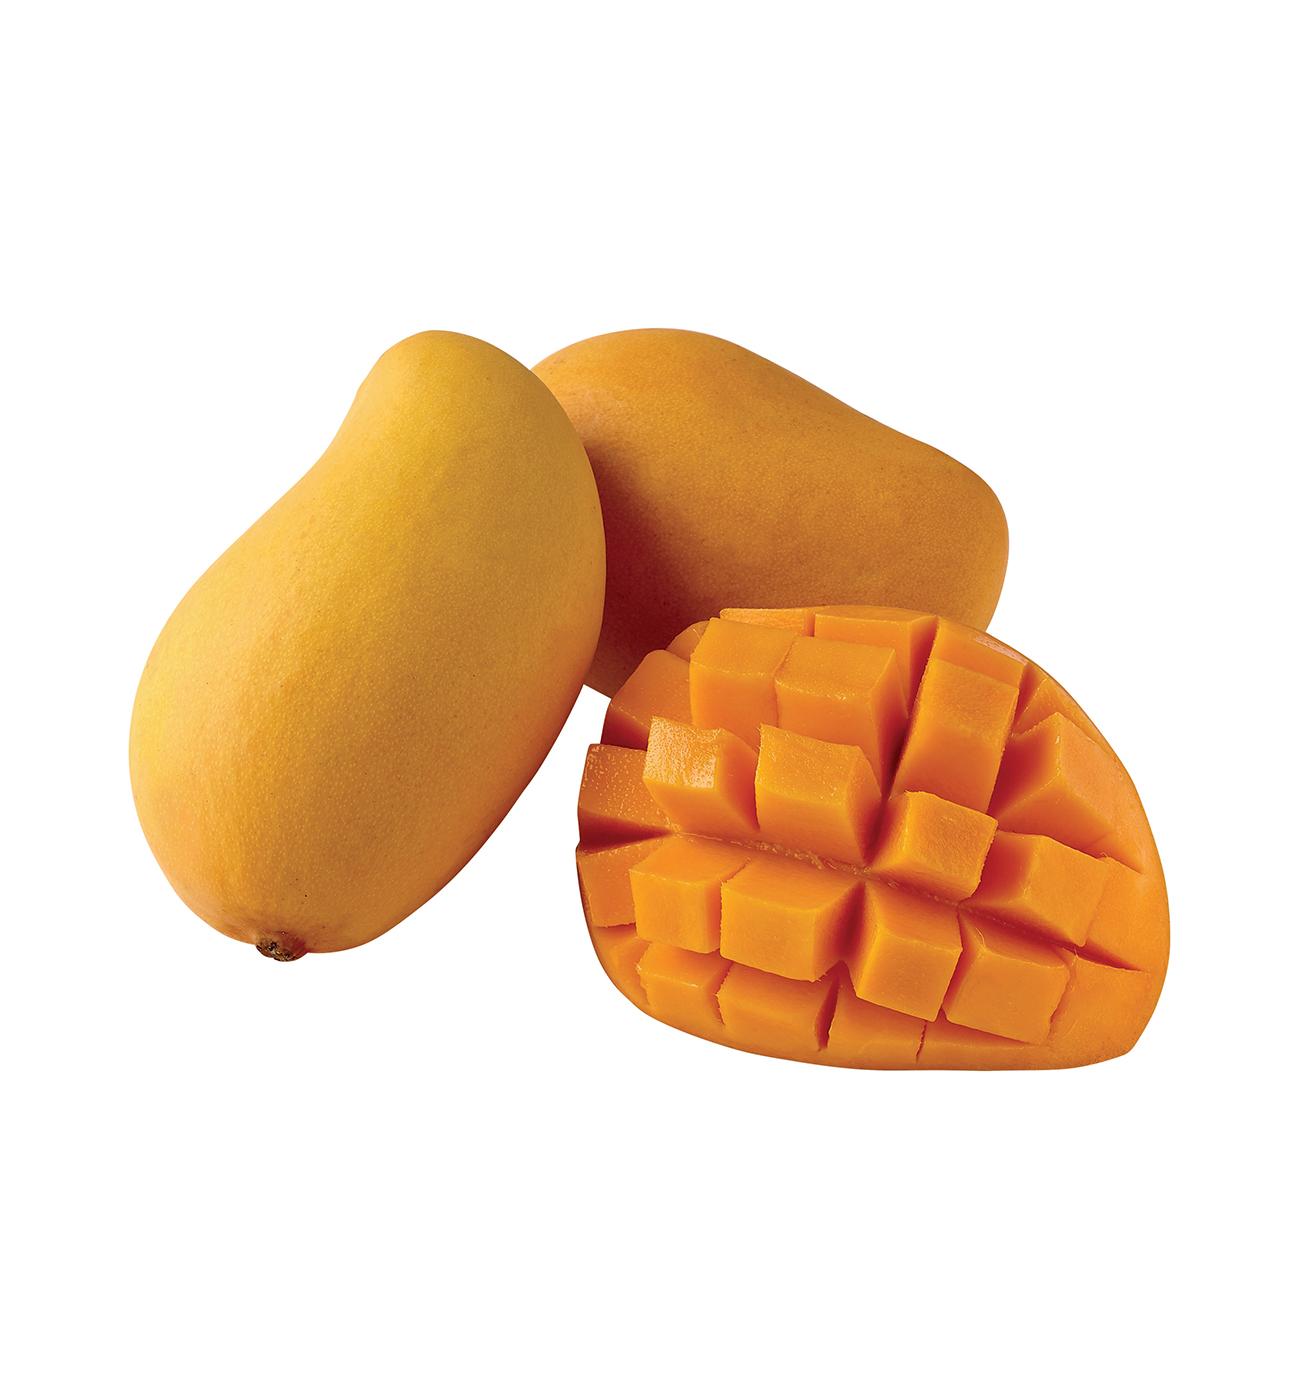 Fresh Small Ataulfo Mango; image 1 of 4